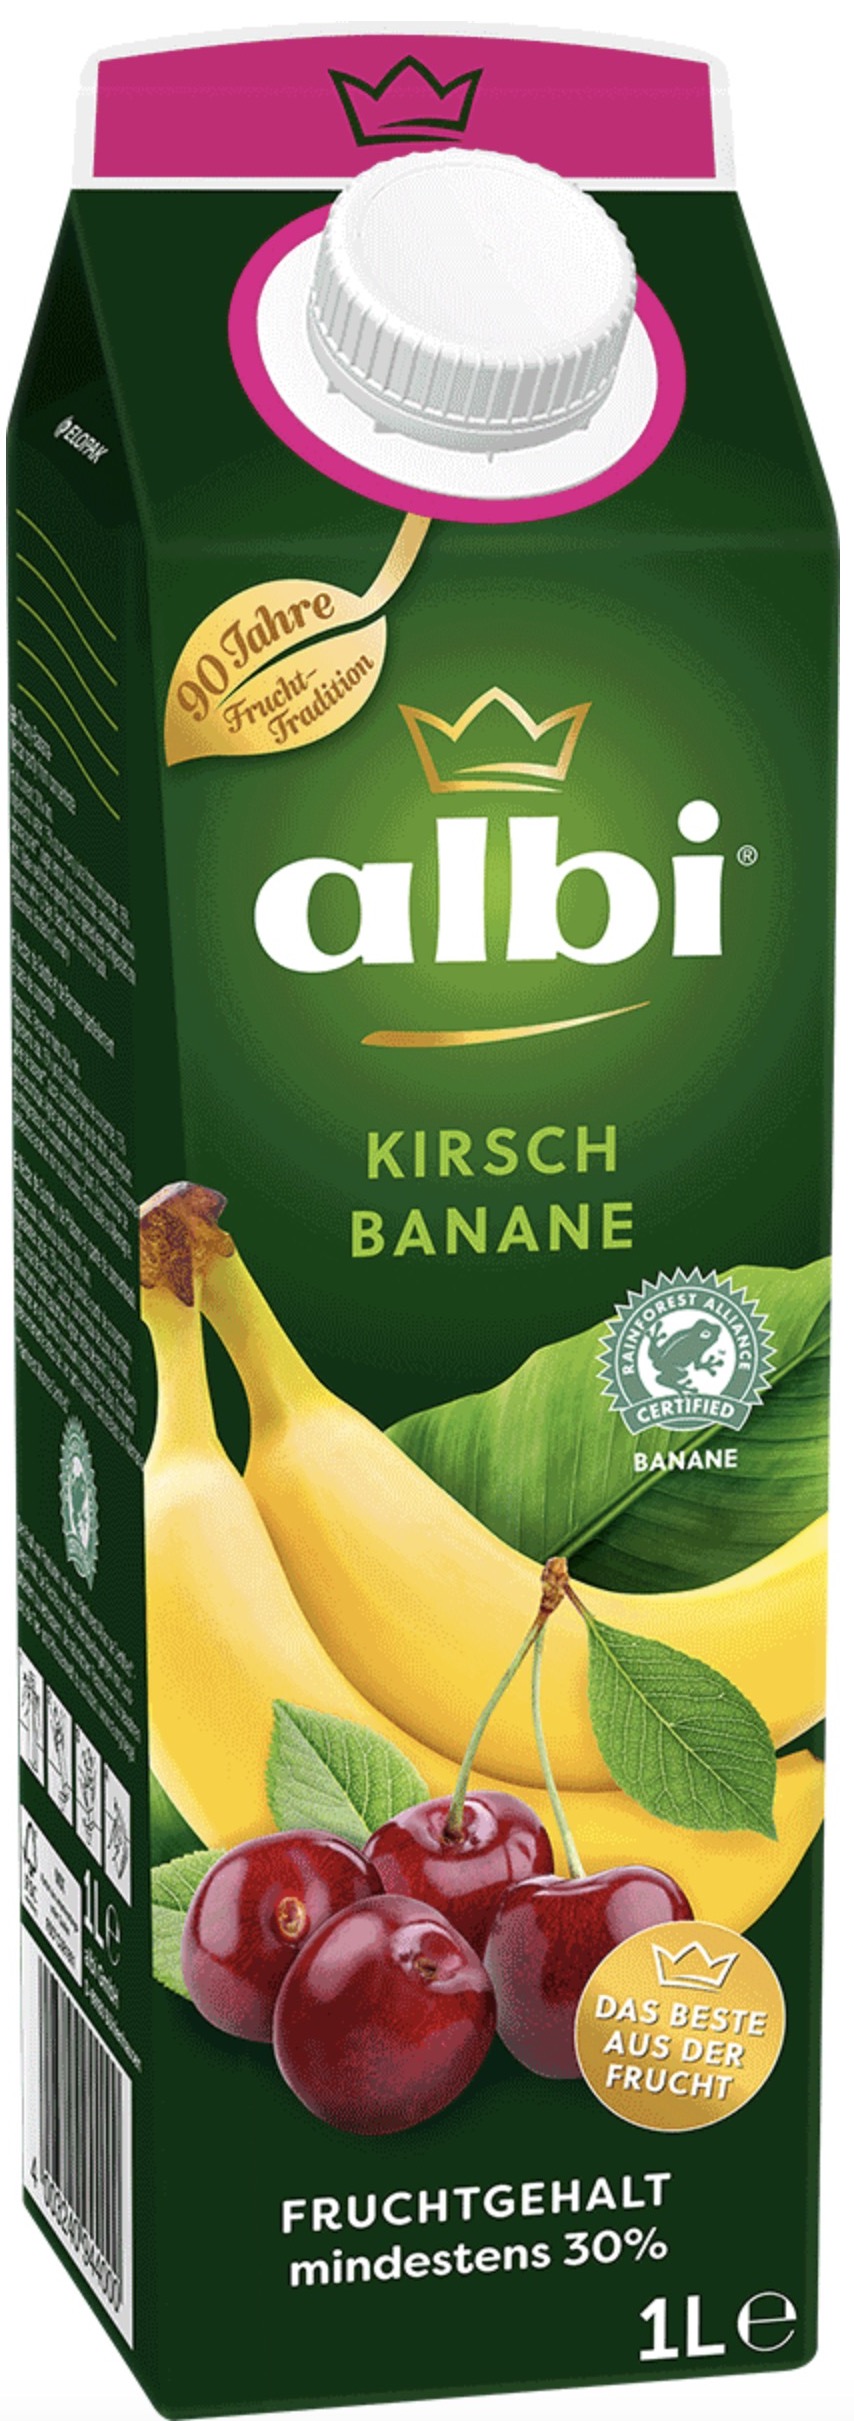 albi Kirsch-Banane 1L